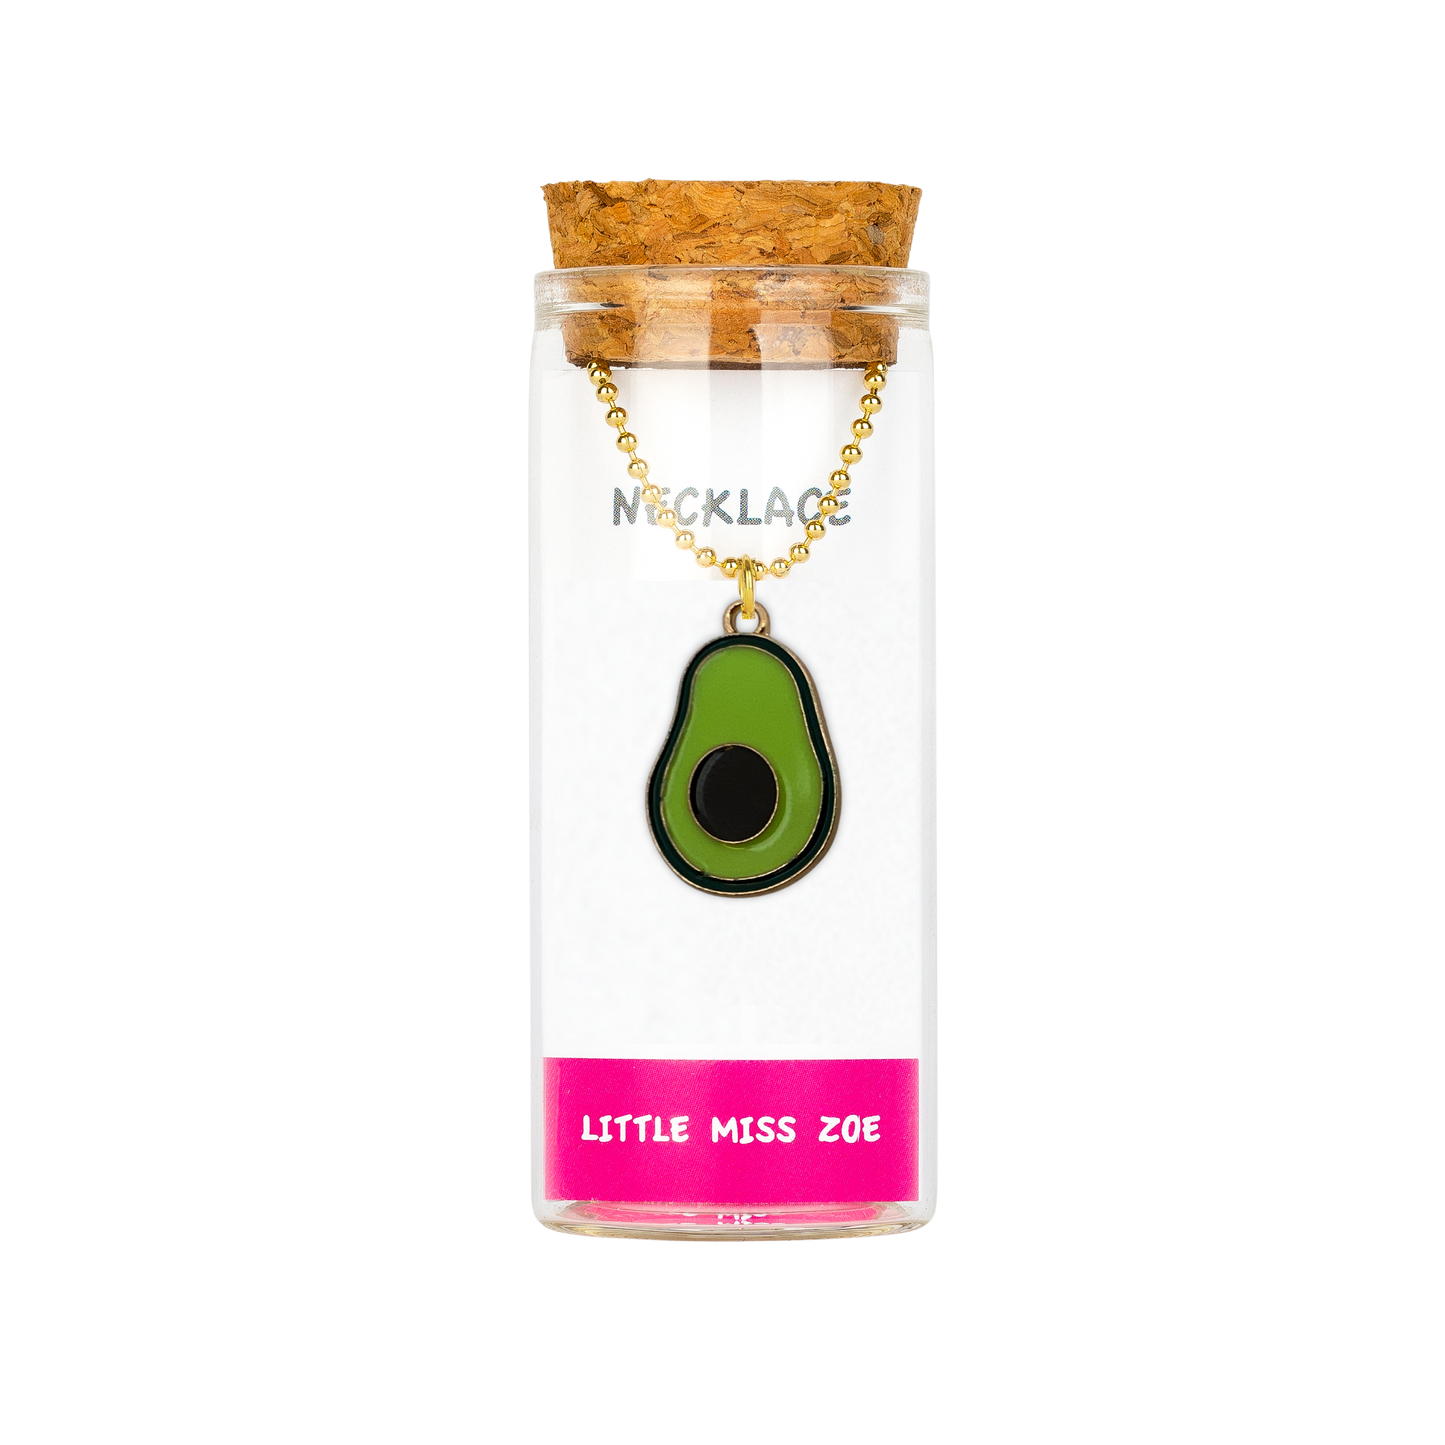 Avocado Necklace in a Bottle